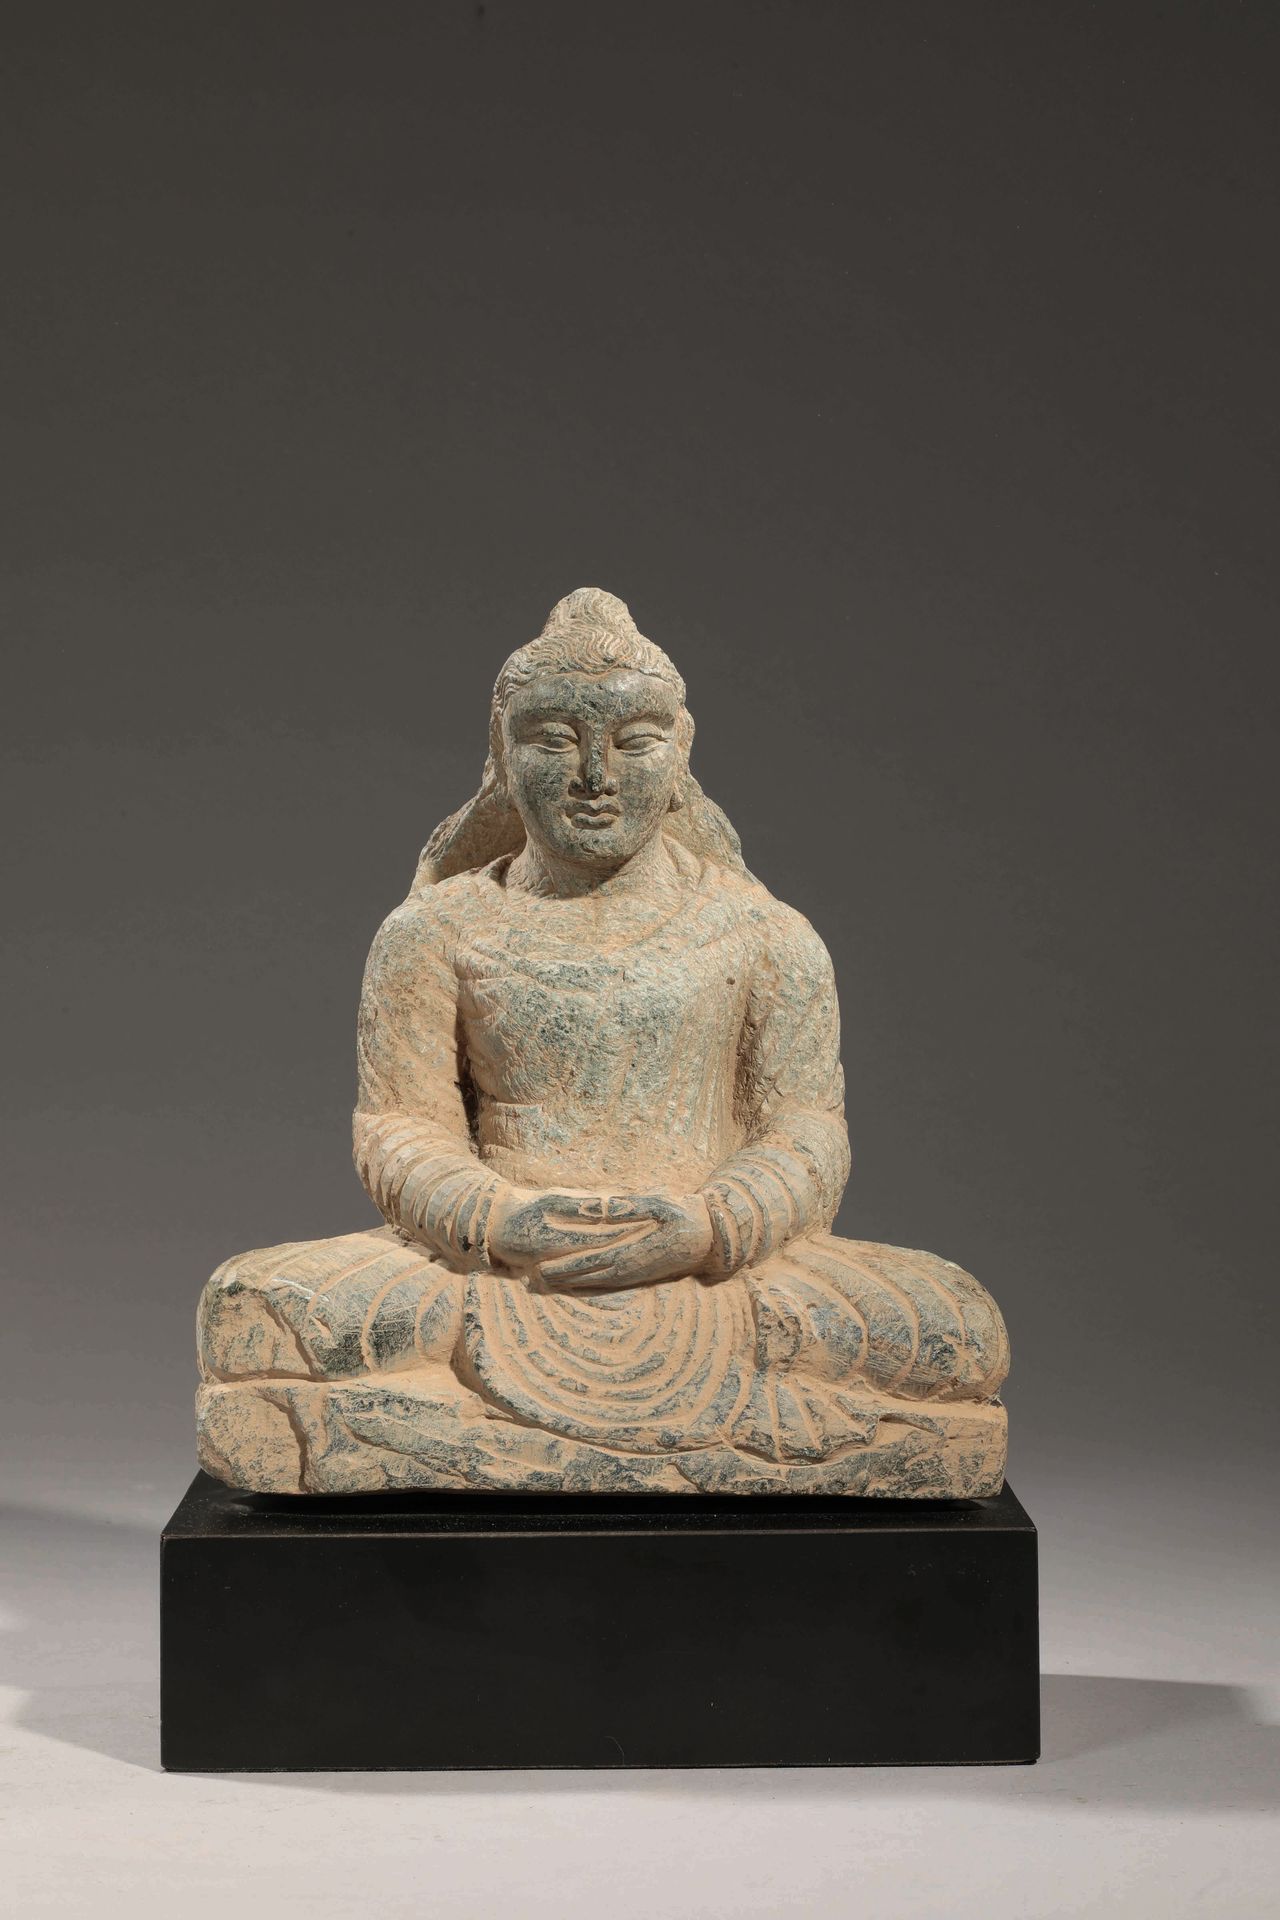 Null SITTING BUDDHA in meditation position
(Dhyâna Mudra) in schist.
Greco-Buddh&hellip;